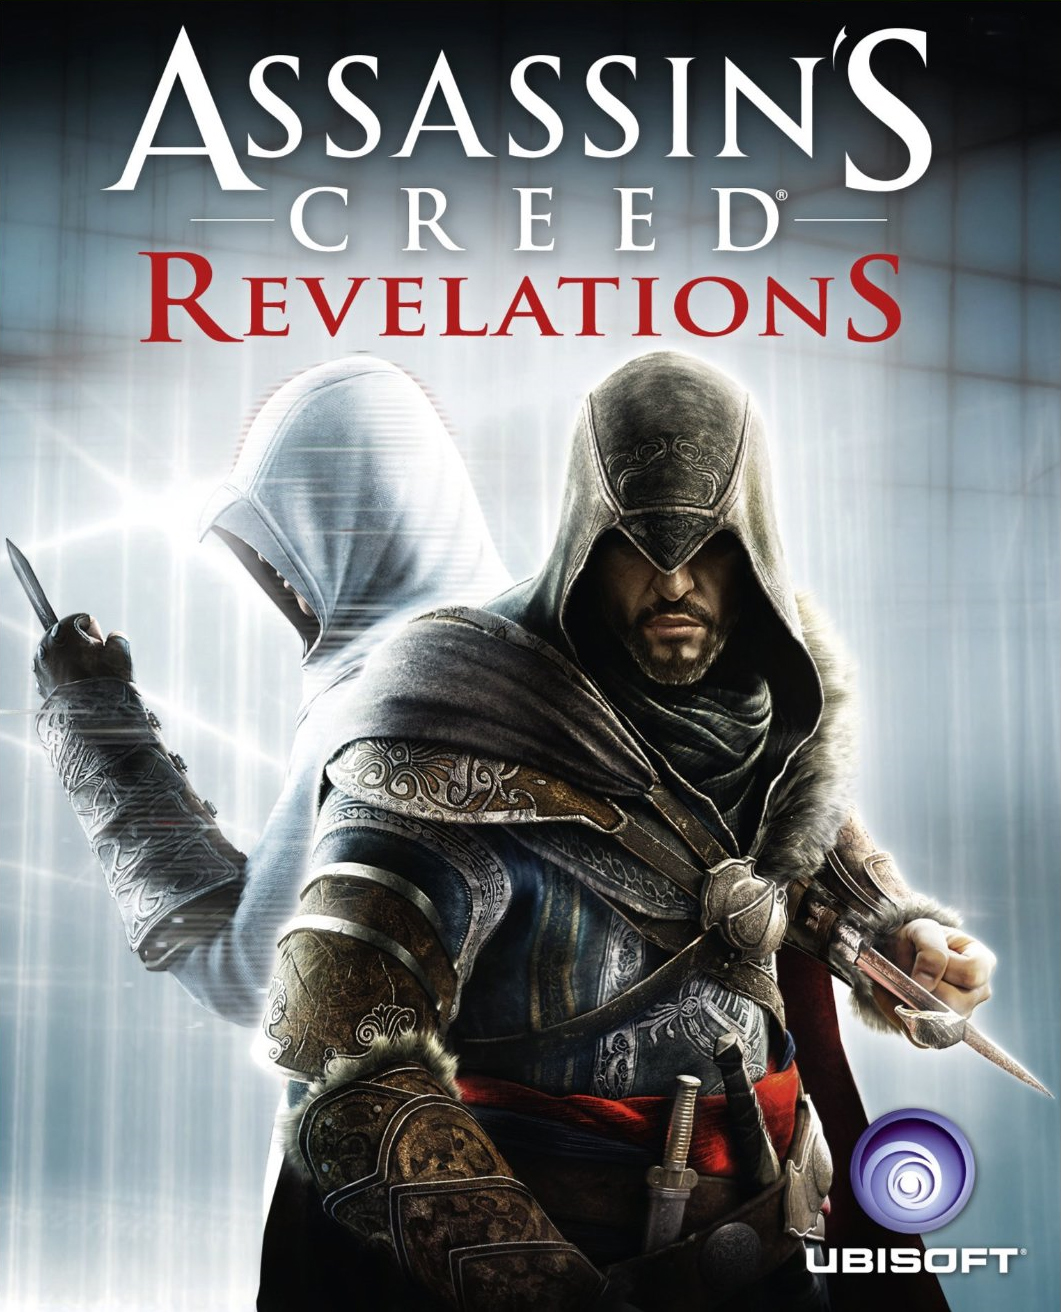 Assassin's Creed Revelations- Second Masyaf Key (Galata Tower